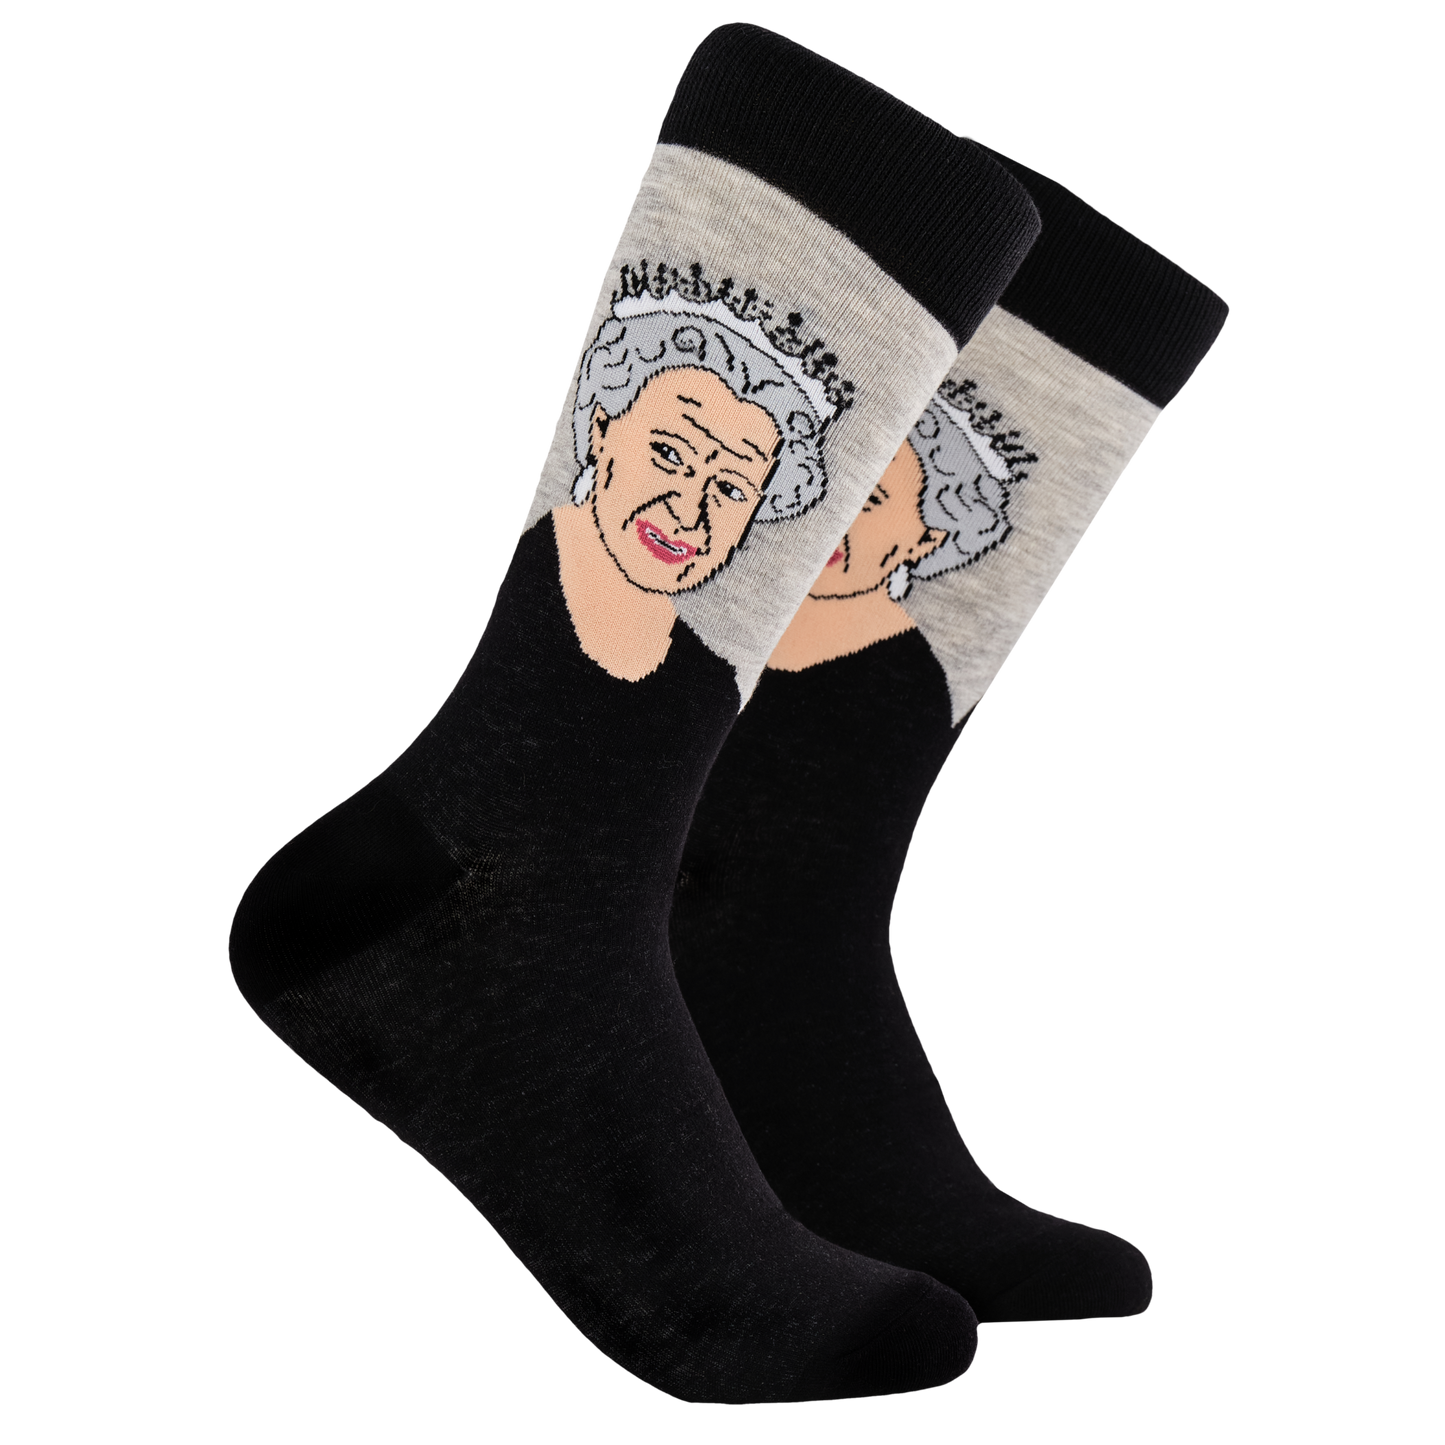 Queen Elizabeth II Royal Socks - HRH. A pair of socks depicting HRH Queen Elizabeth II. Black legs, black cuff, heel and toe.